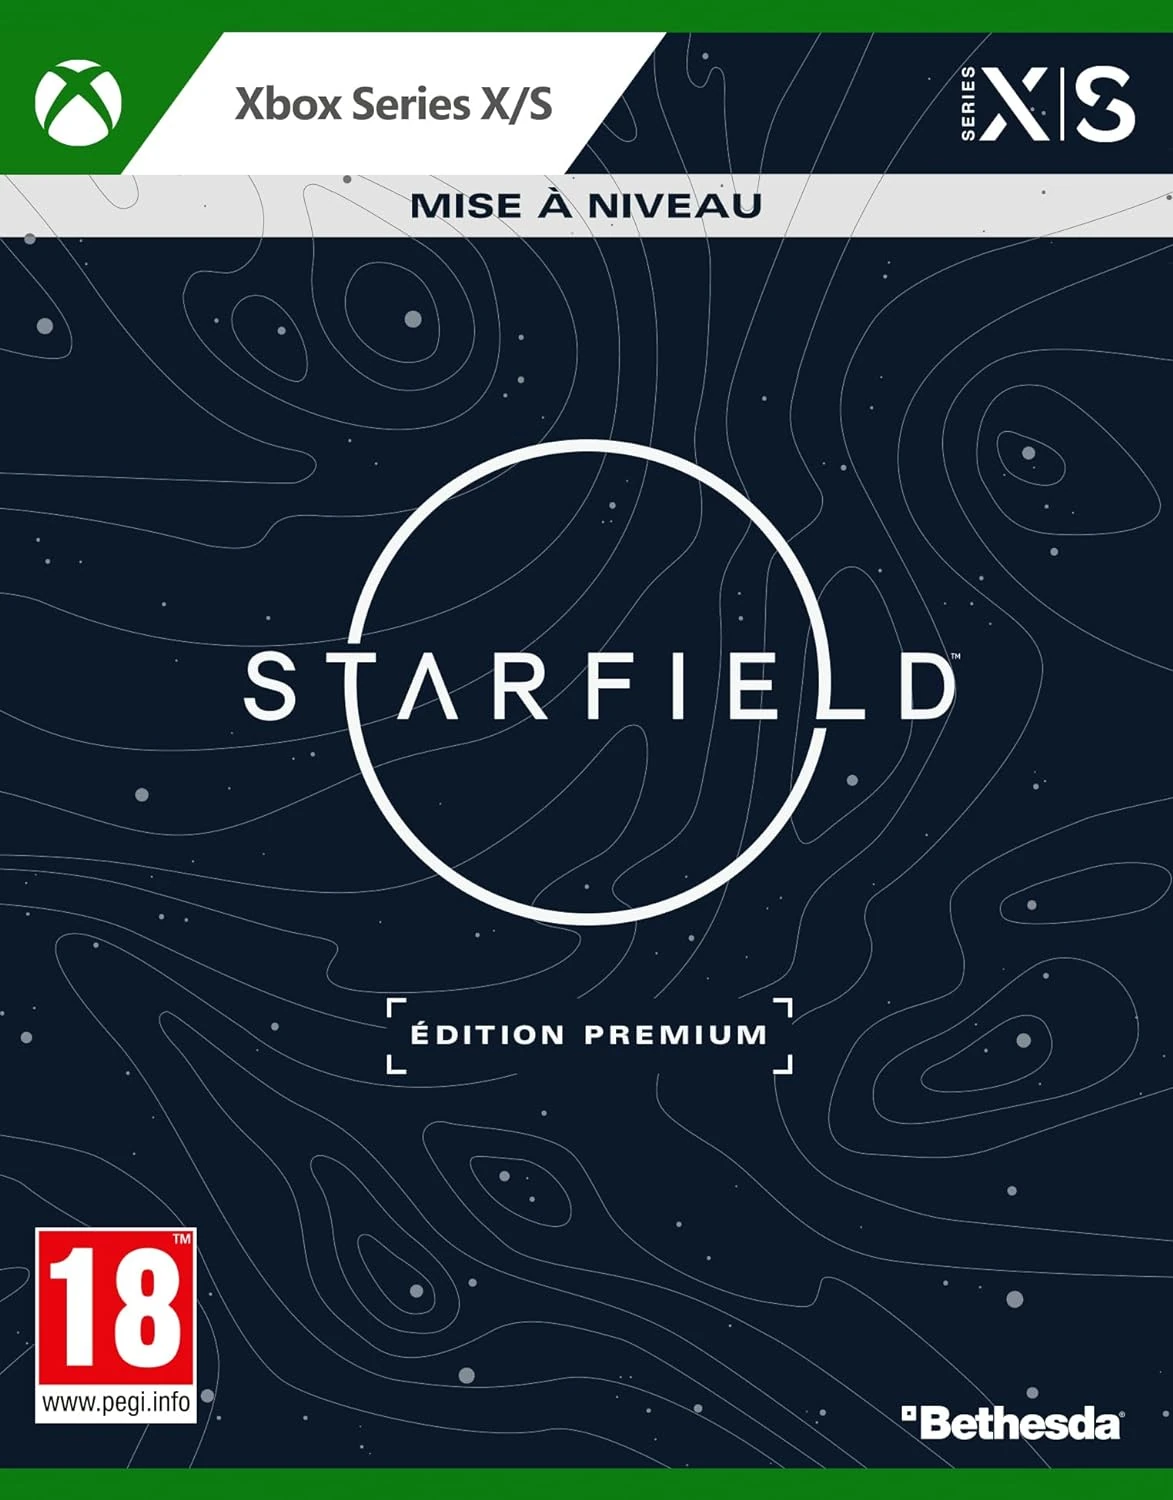 Starfield - Mise à Niveau - Premium Upgrade Edition (DLC)